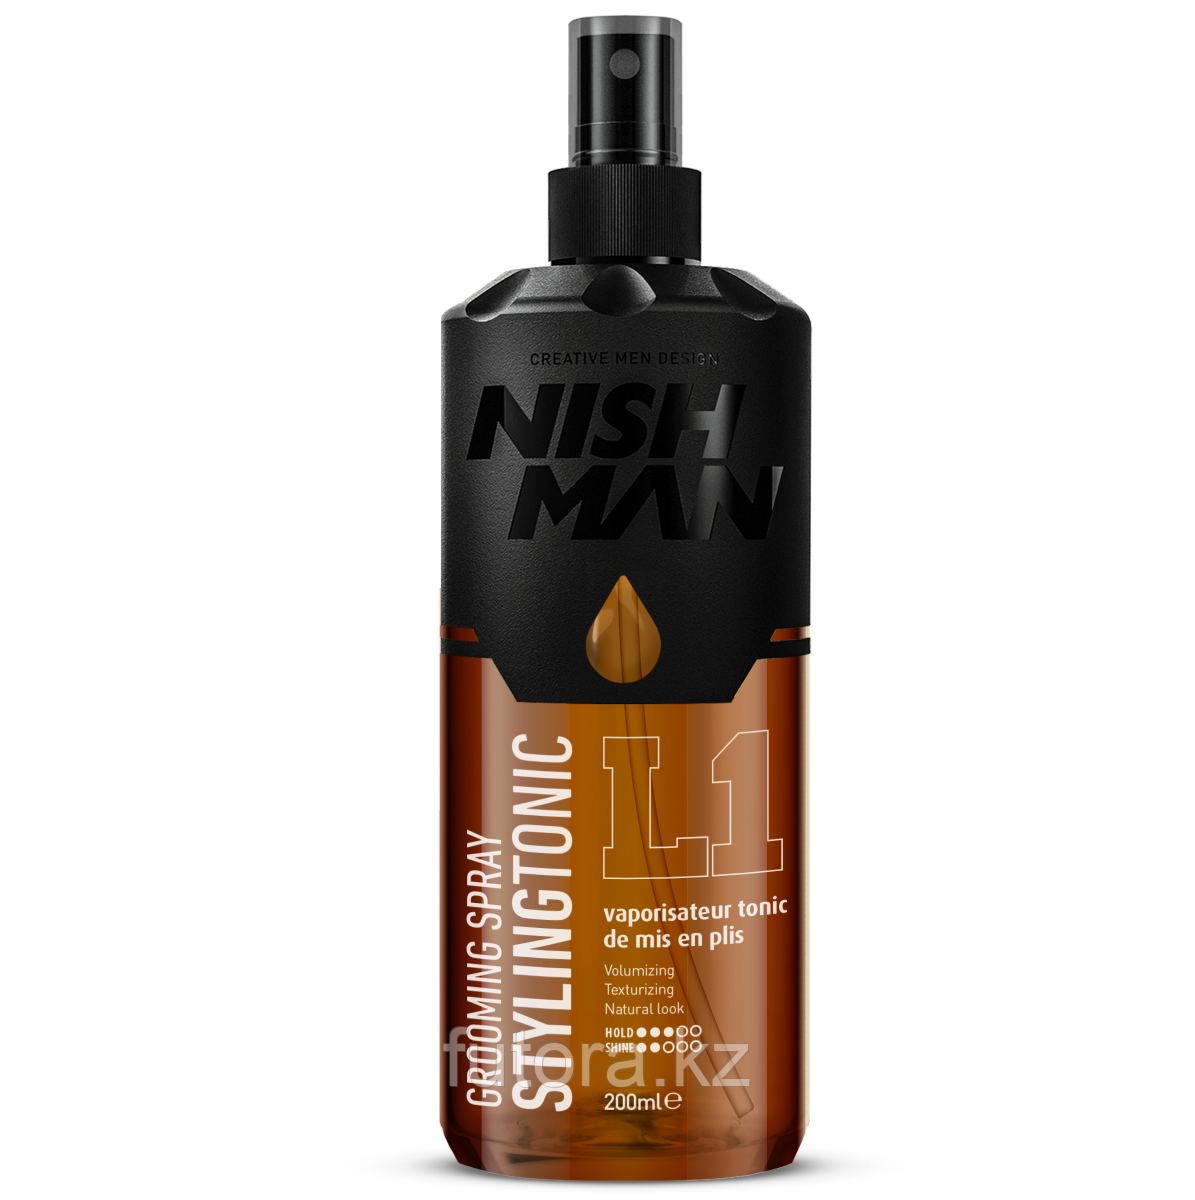 Тоник-спрей " Nishman Grooming Spray Styling Tonic" для повседневной укладки волос.